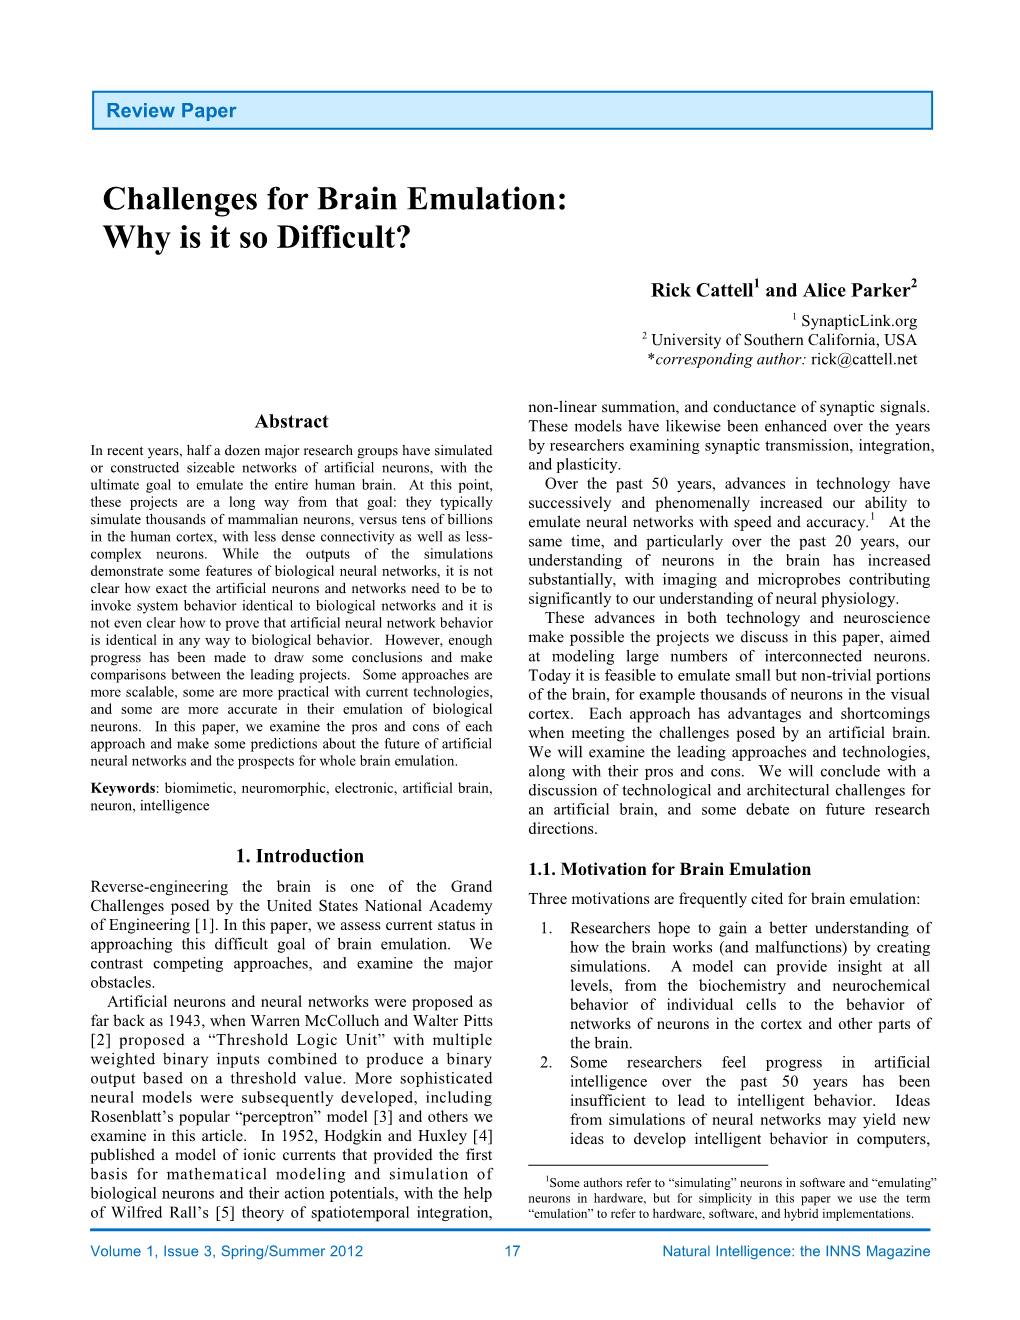 Challenges for Brain Emulation